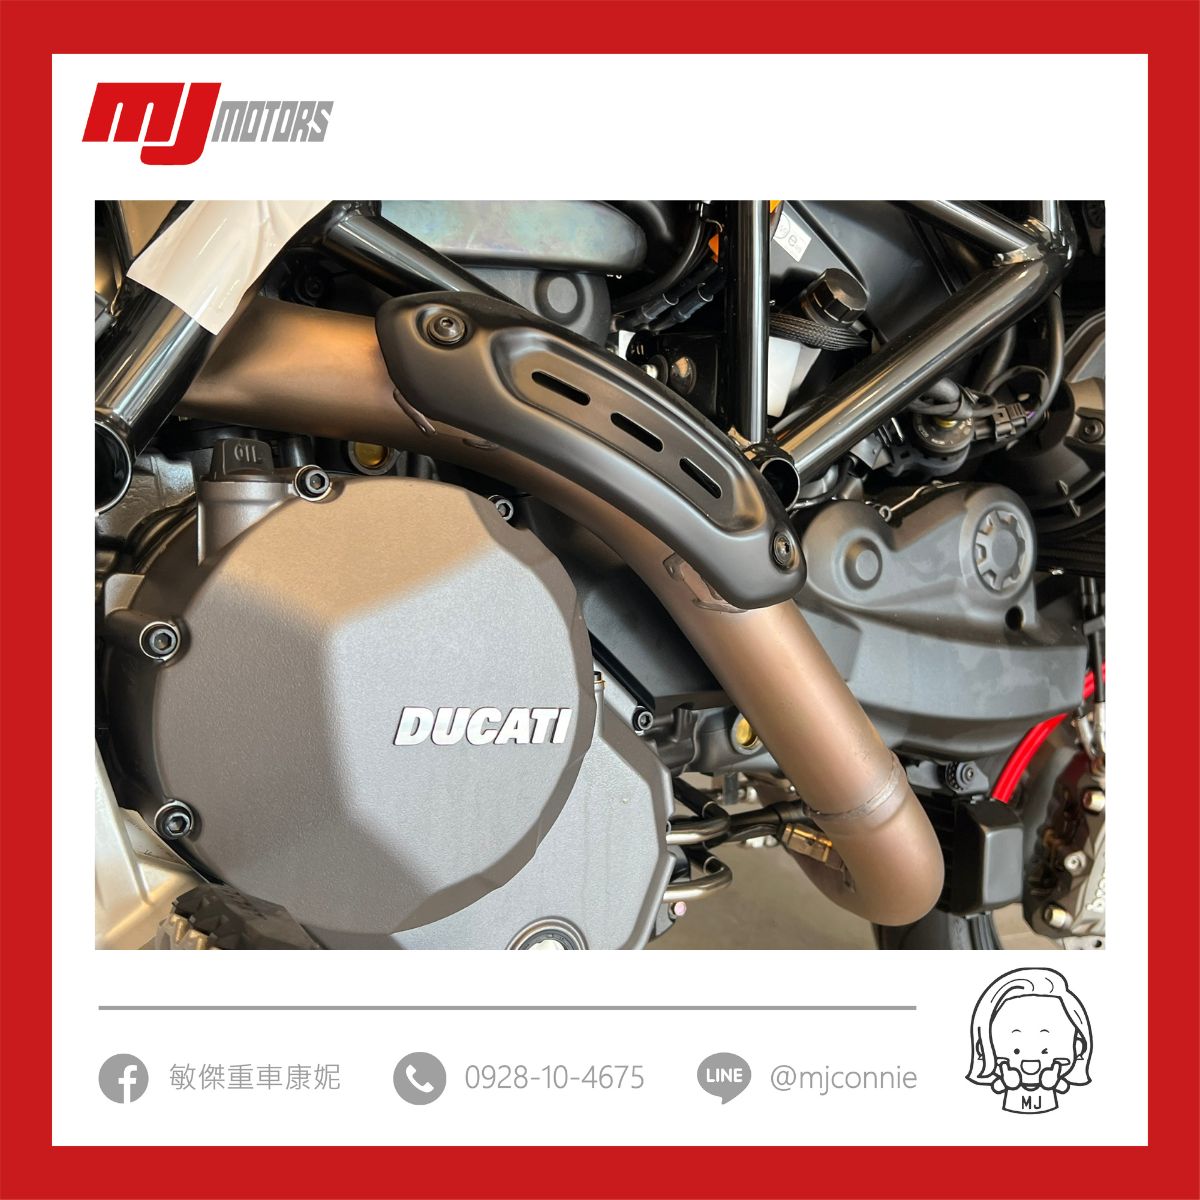 DUCATI HYPERMOTARD 950新車出售中 『敏傑康妮』Ducati Hypermotard 950 RVE 塗鴨版  靈活好車 全額零利率 價格95.8萬元 | 敏傑車業資深銷售專員 康妮 Connie